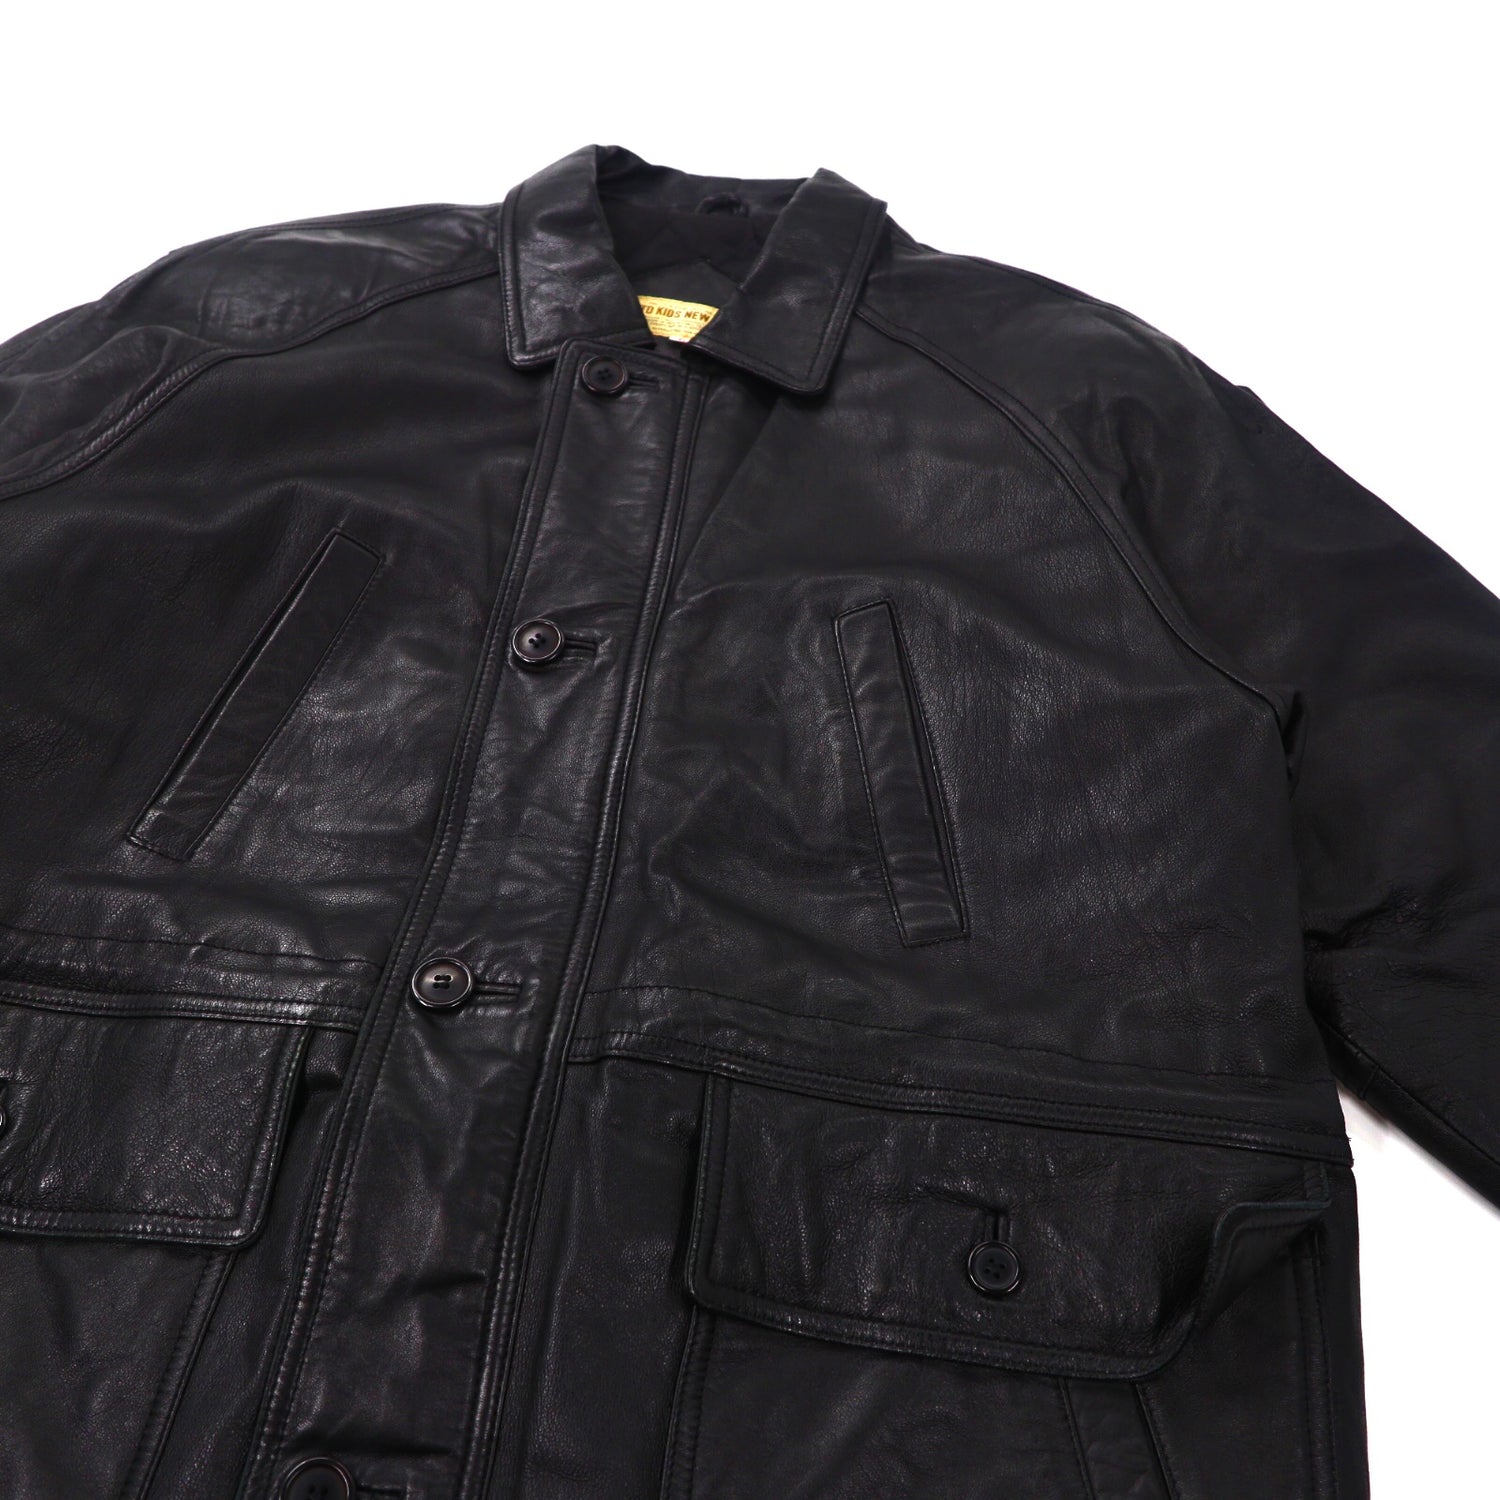 MTD KIDS New Basic Leather Coat L Black Lamb Leather Quilting 